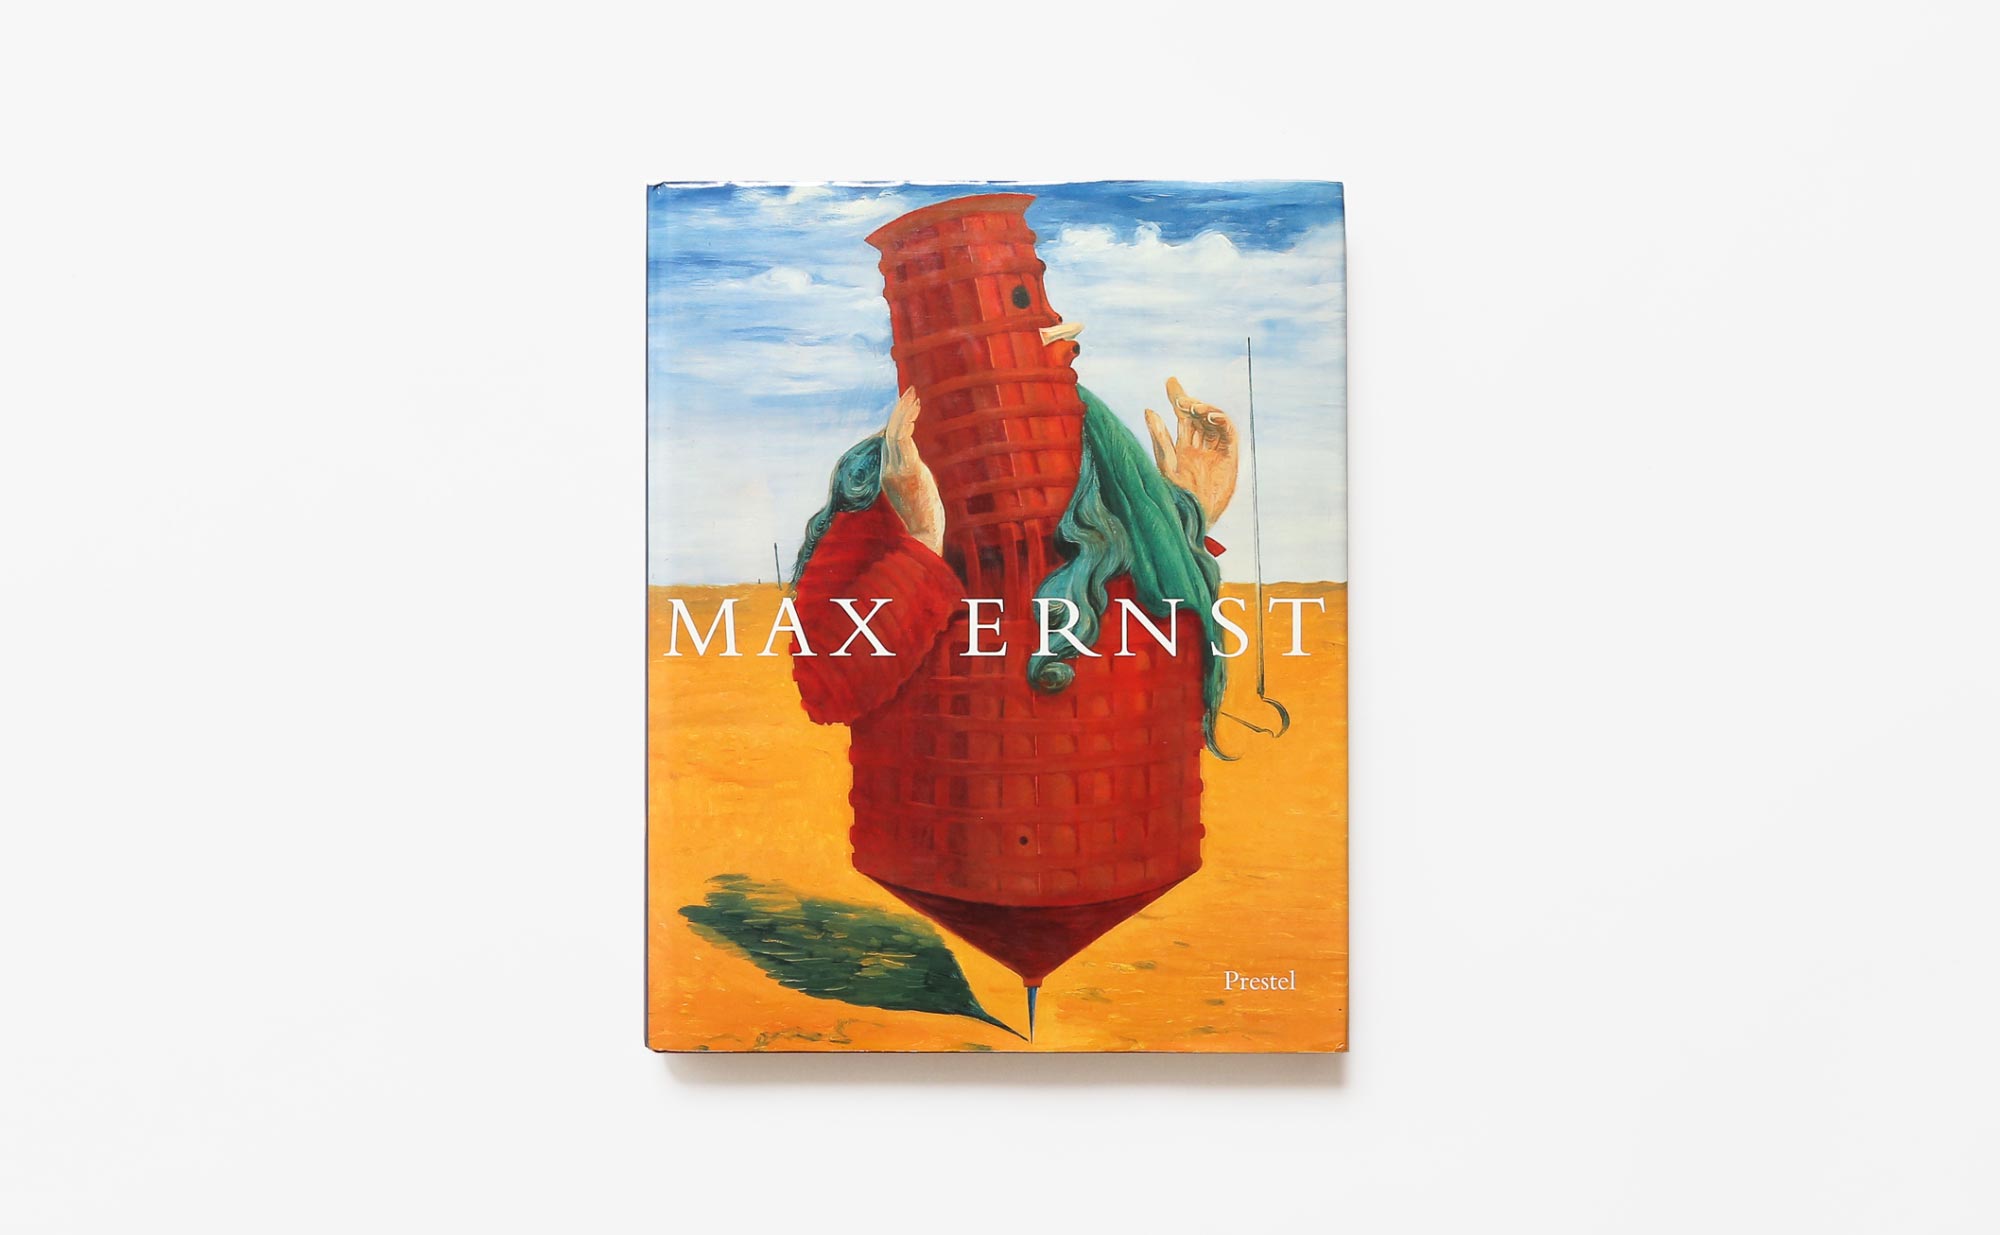 Max Ernst: A Retrospective | Werner Spies | マックス・エルンスト 作品集 | nostos books  ノストスブックス